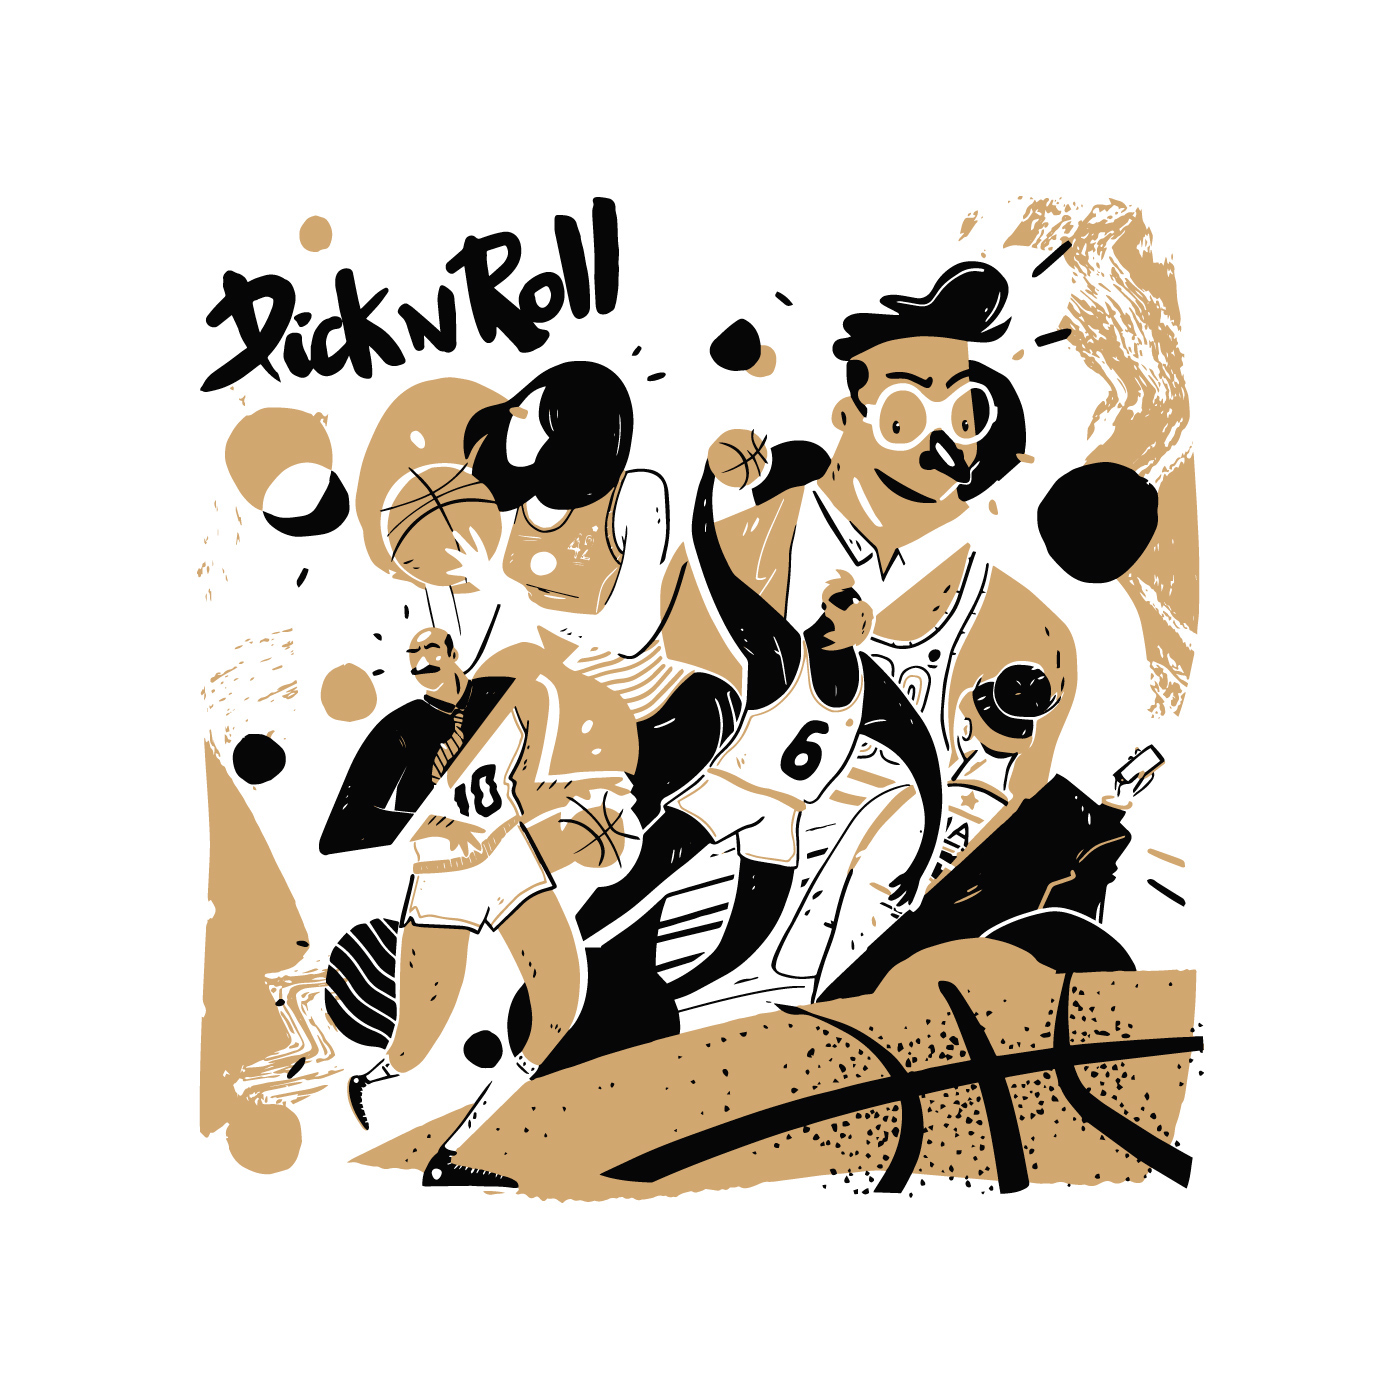 Serigraphy print screenpirnt poster basketball Boxe backfist picknroll